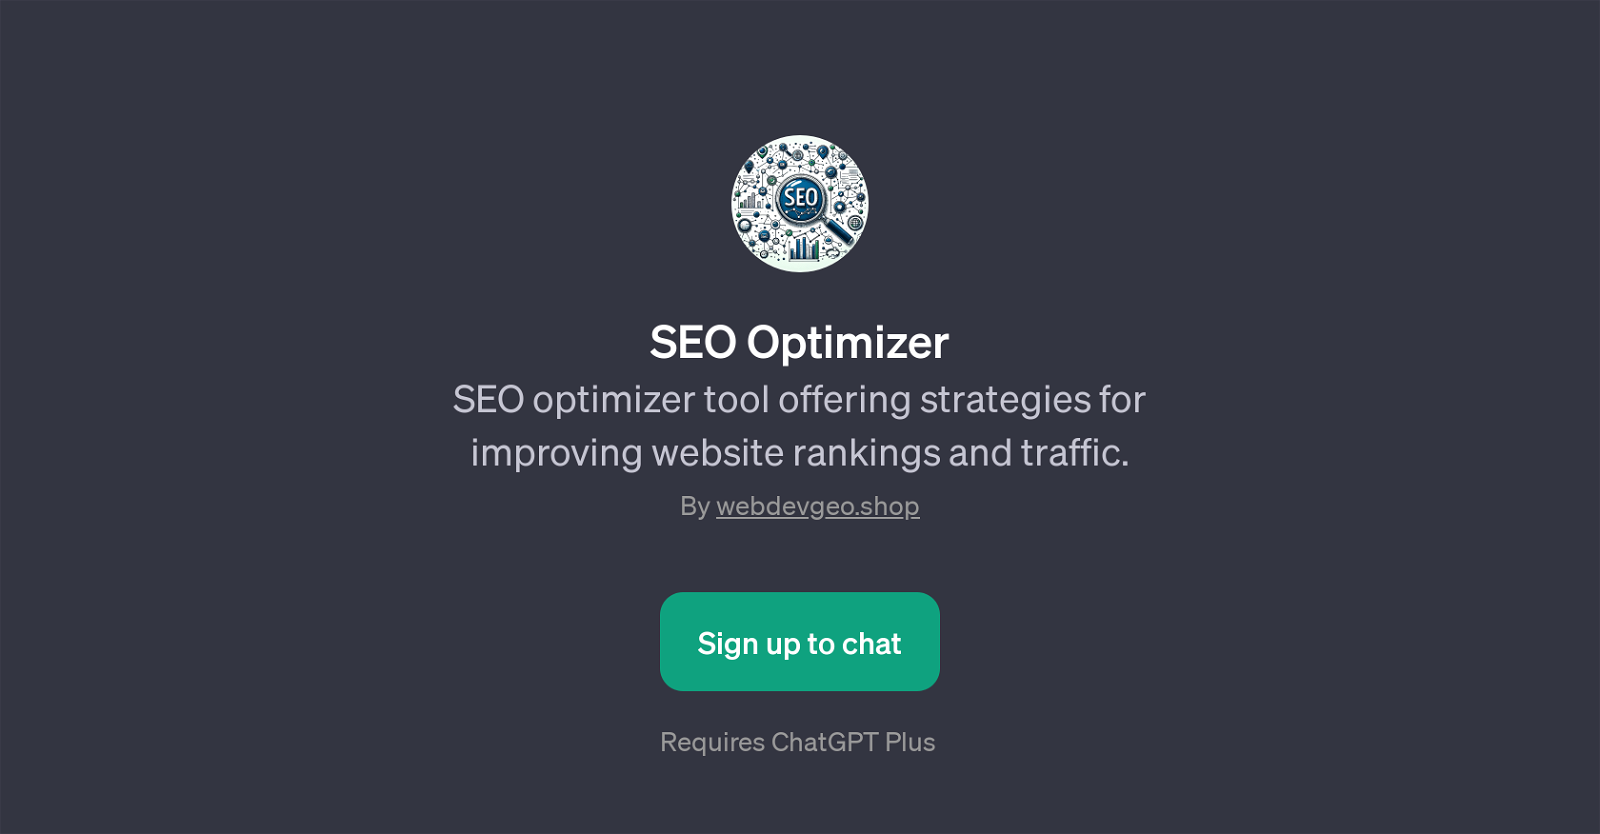 SEO Optimizer website